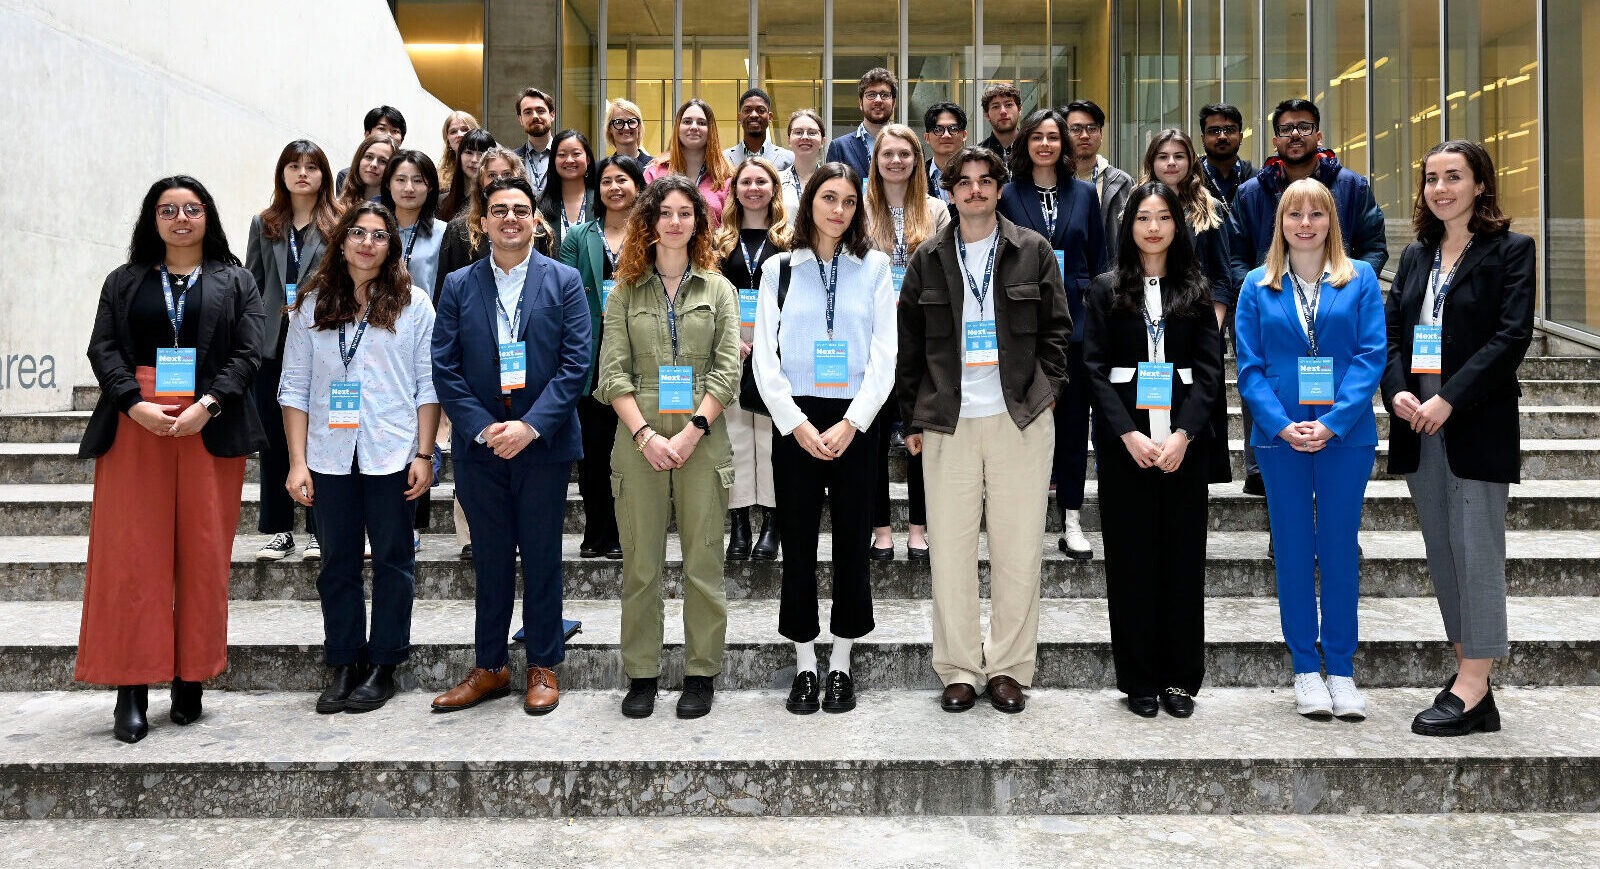 The U7+ student delegates stand together at Bocconi University (photo by Bocconi University)